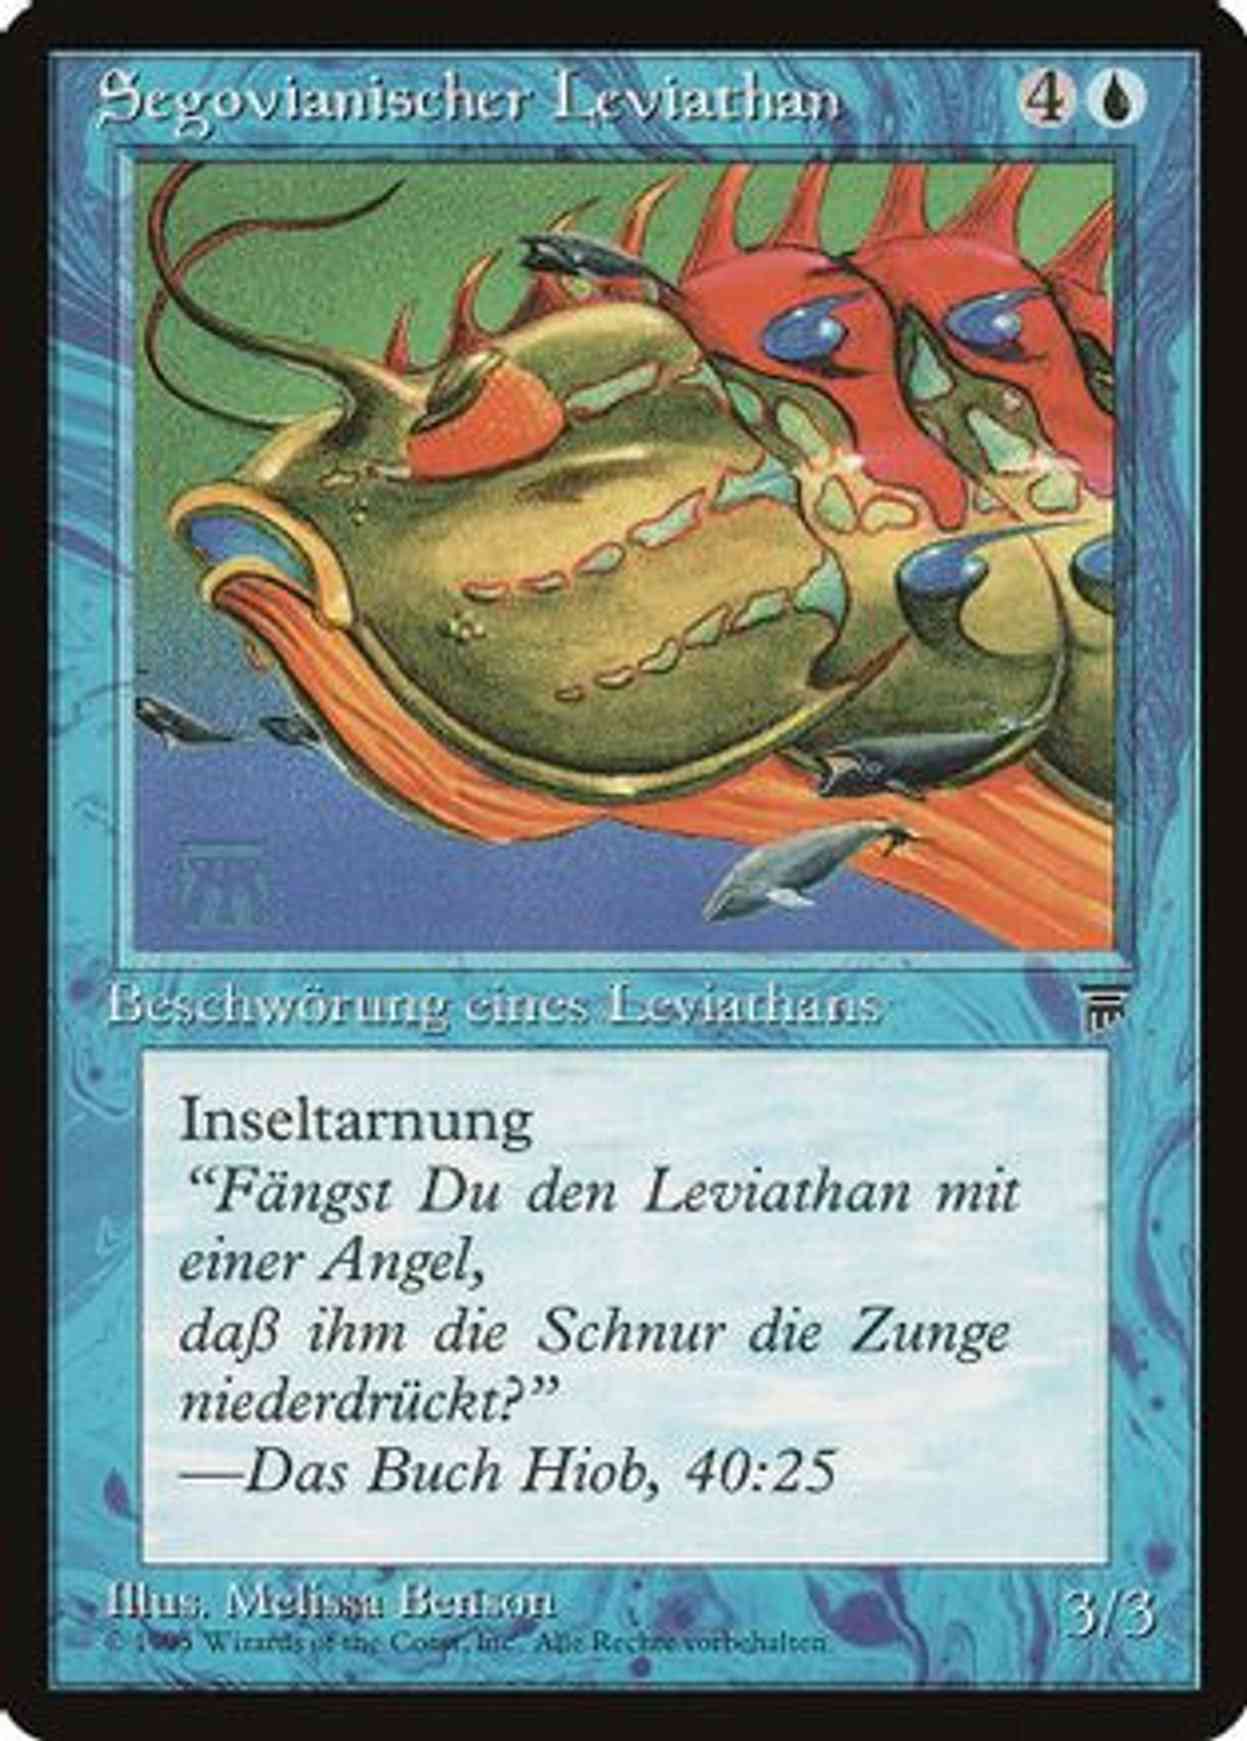 Segovian Leviathan (German) - "Segovianischer Leviathan" magic card front